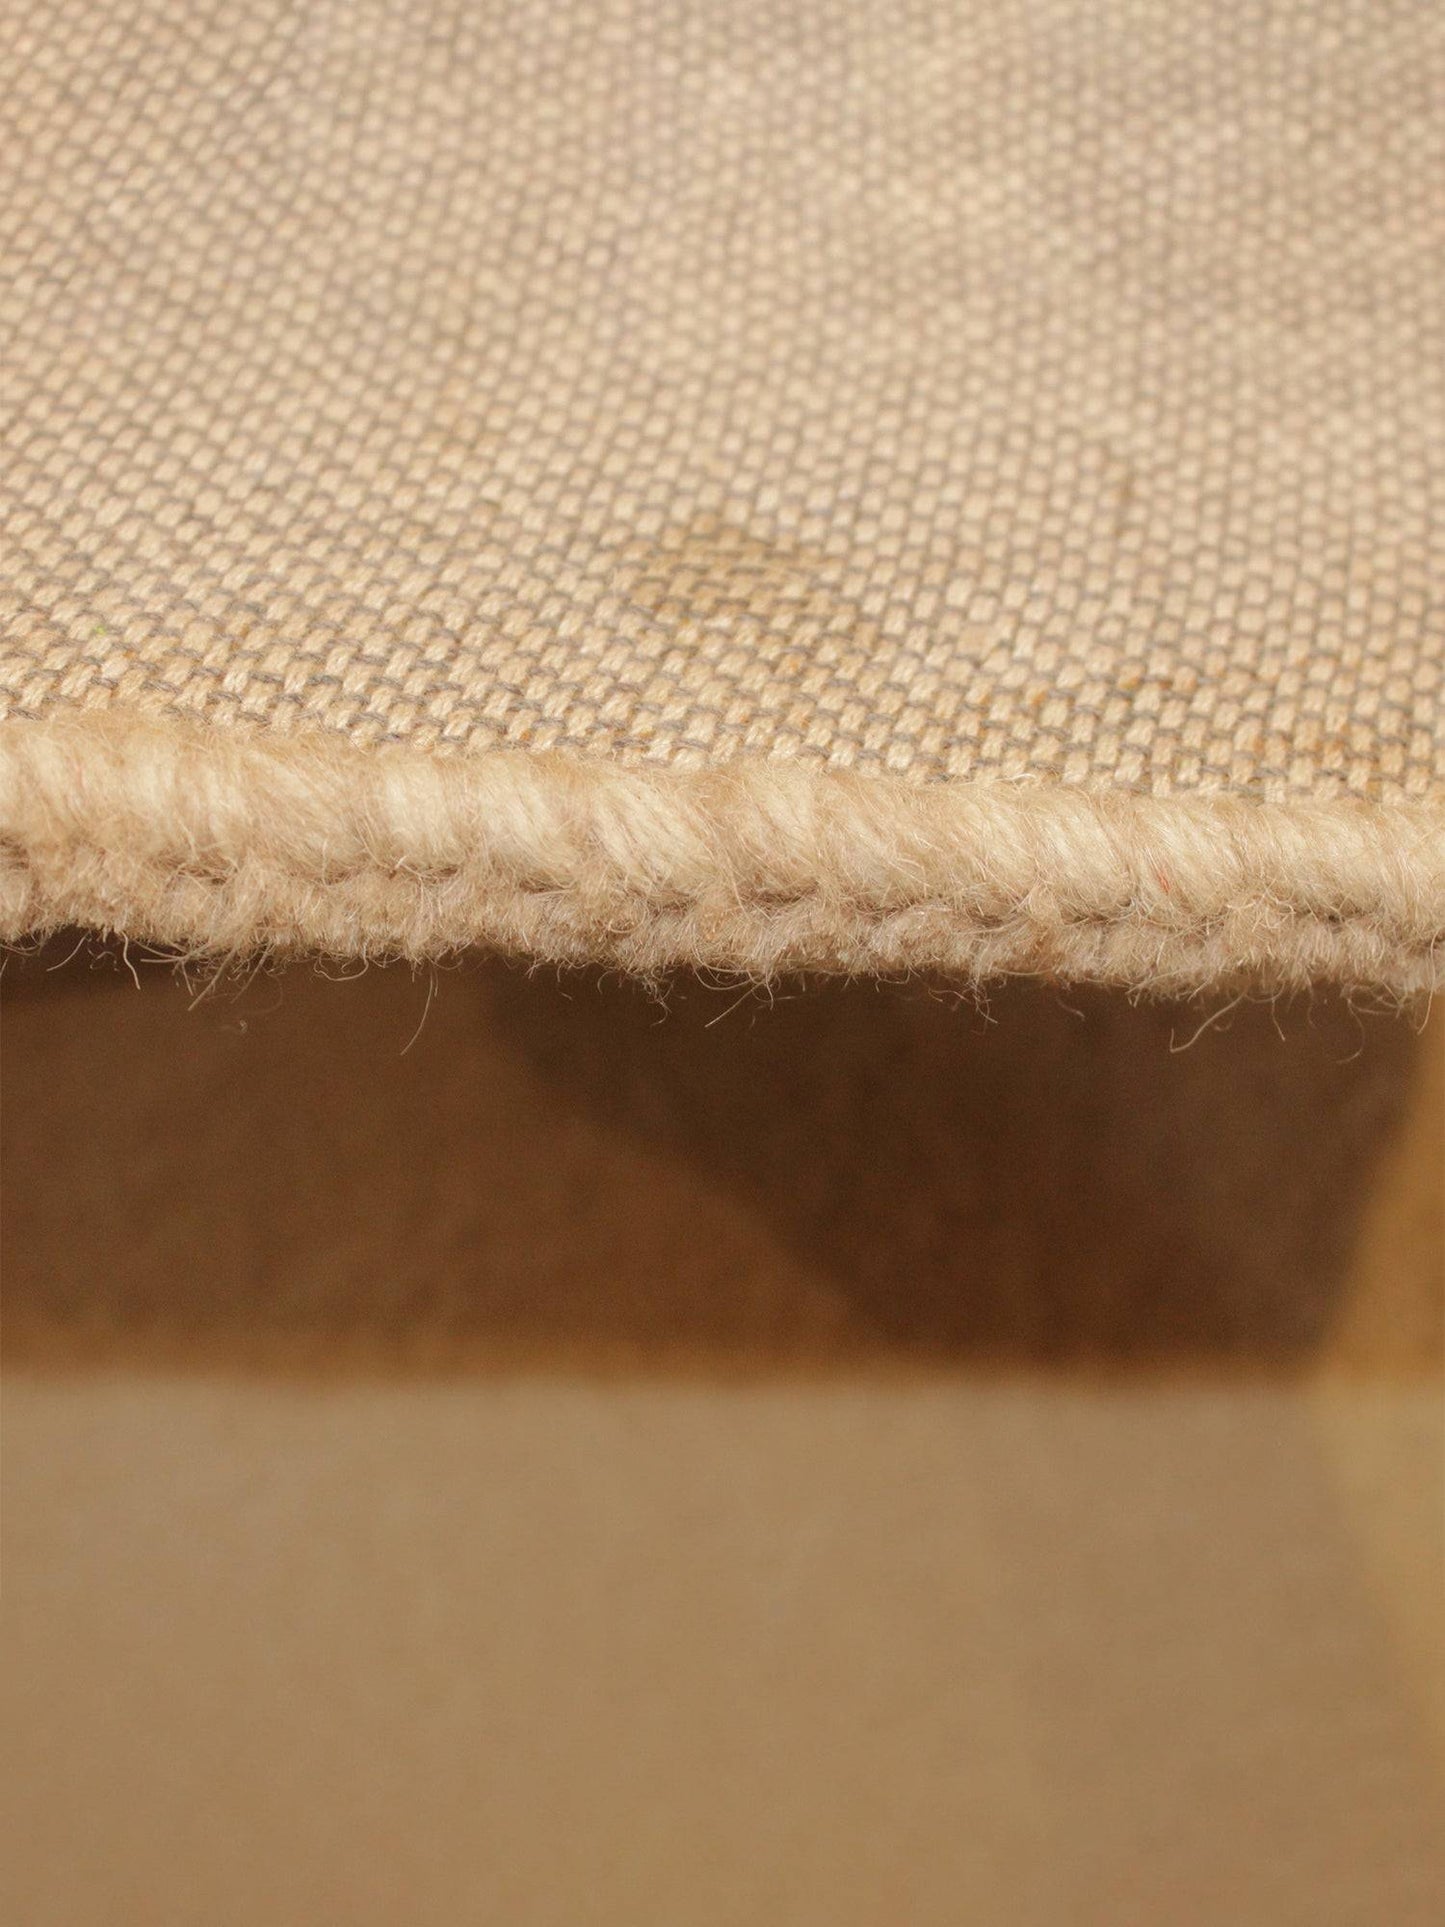 Carpet Hand Tufted 100% Woollen  Beige - 2ft X 4ft